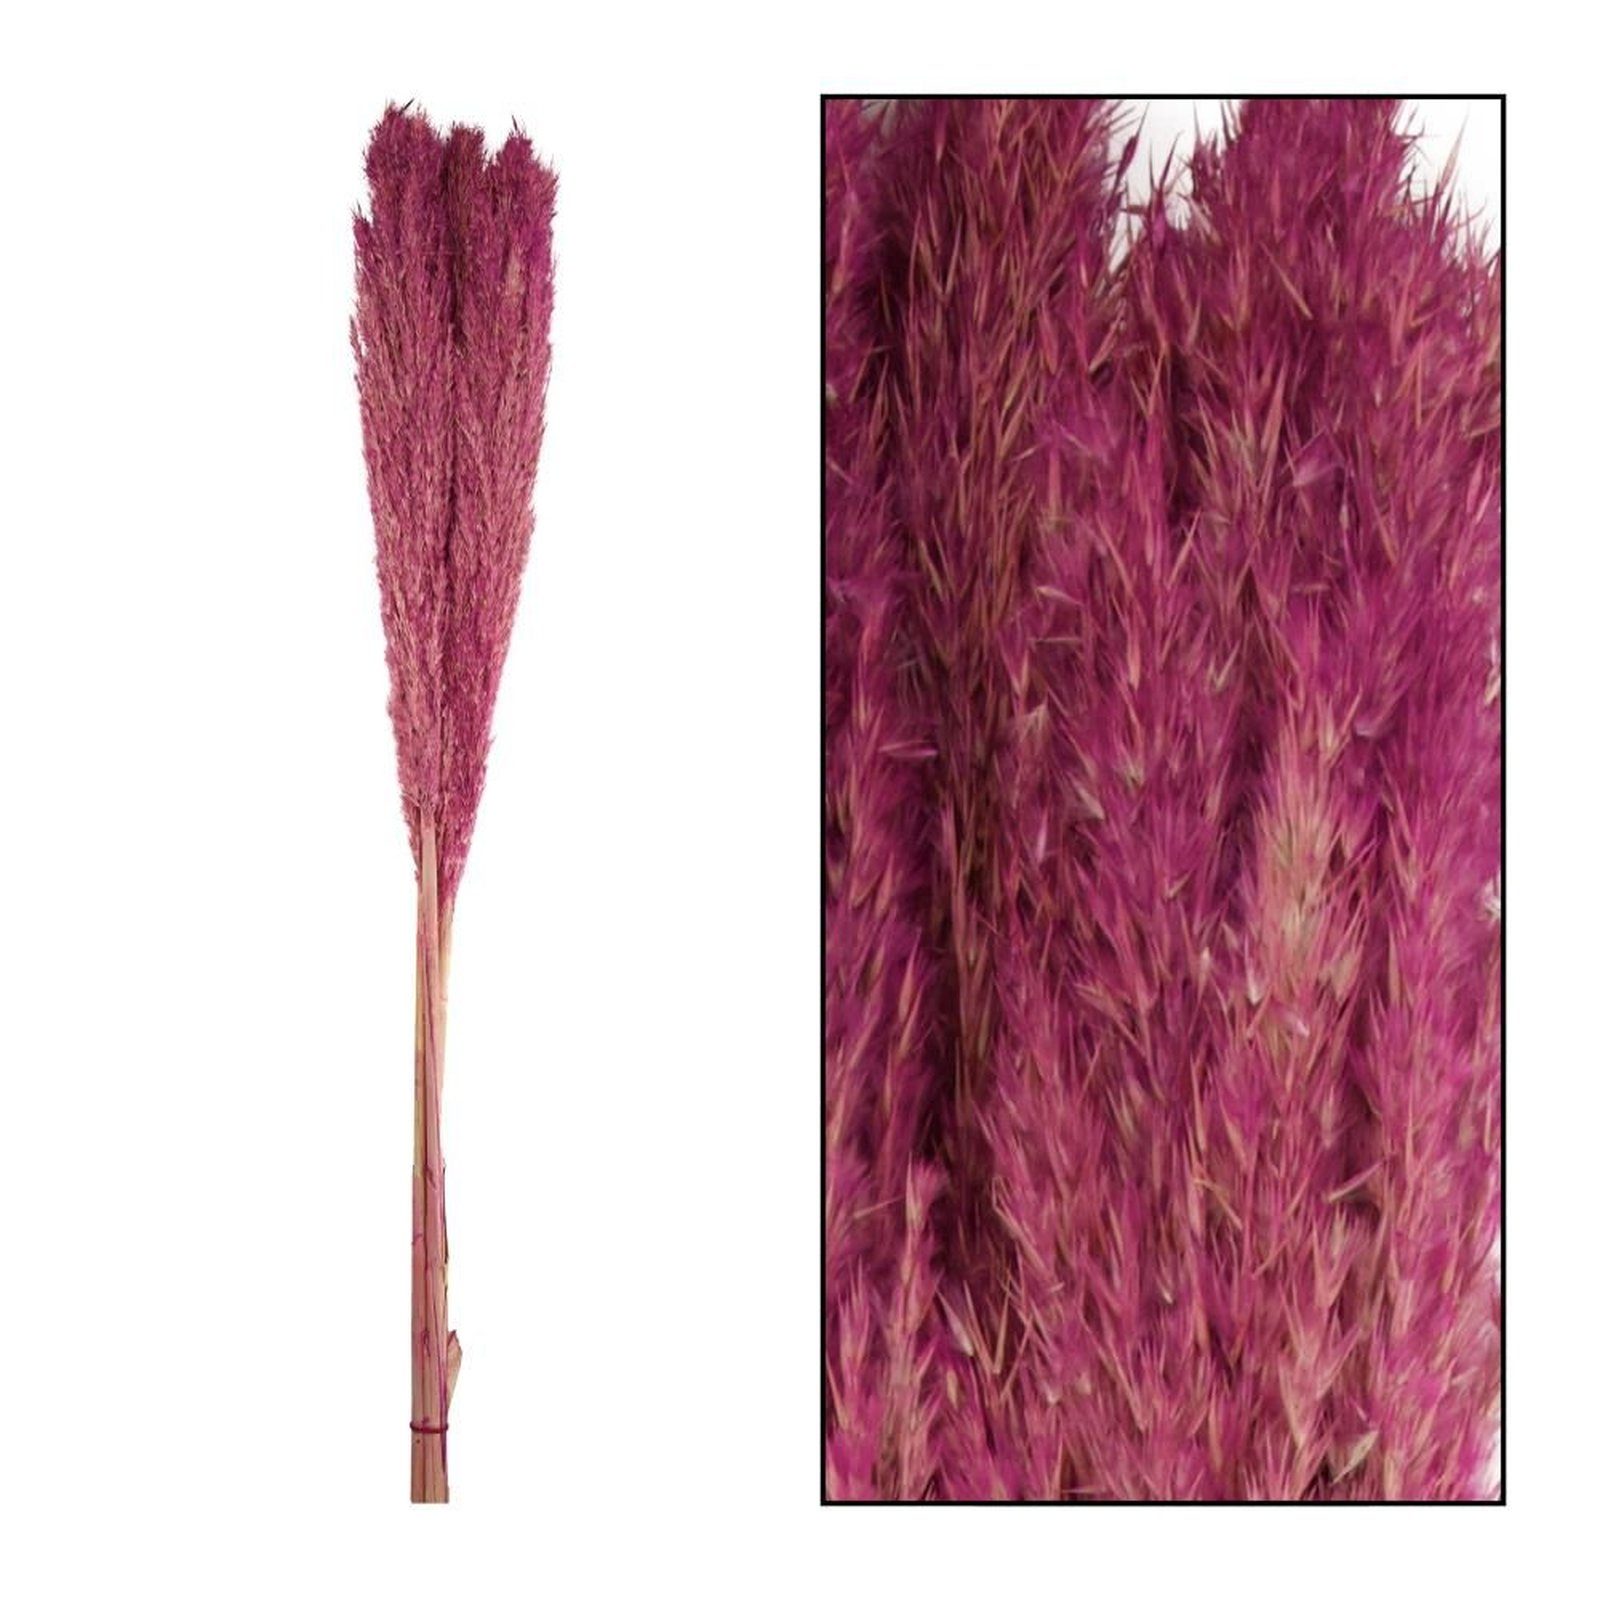 Trockenblume 3 Arundo donax - pink - Wild reed - Pfahlrohr 115 - cm Stück, DIJK plume